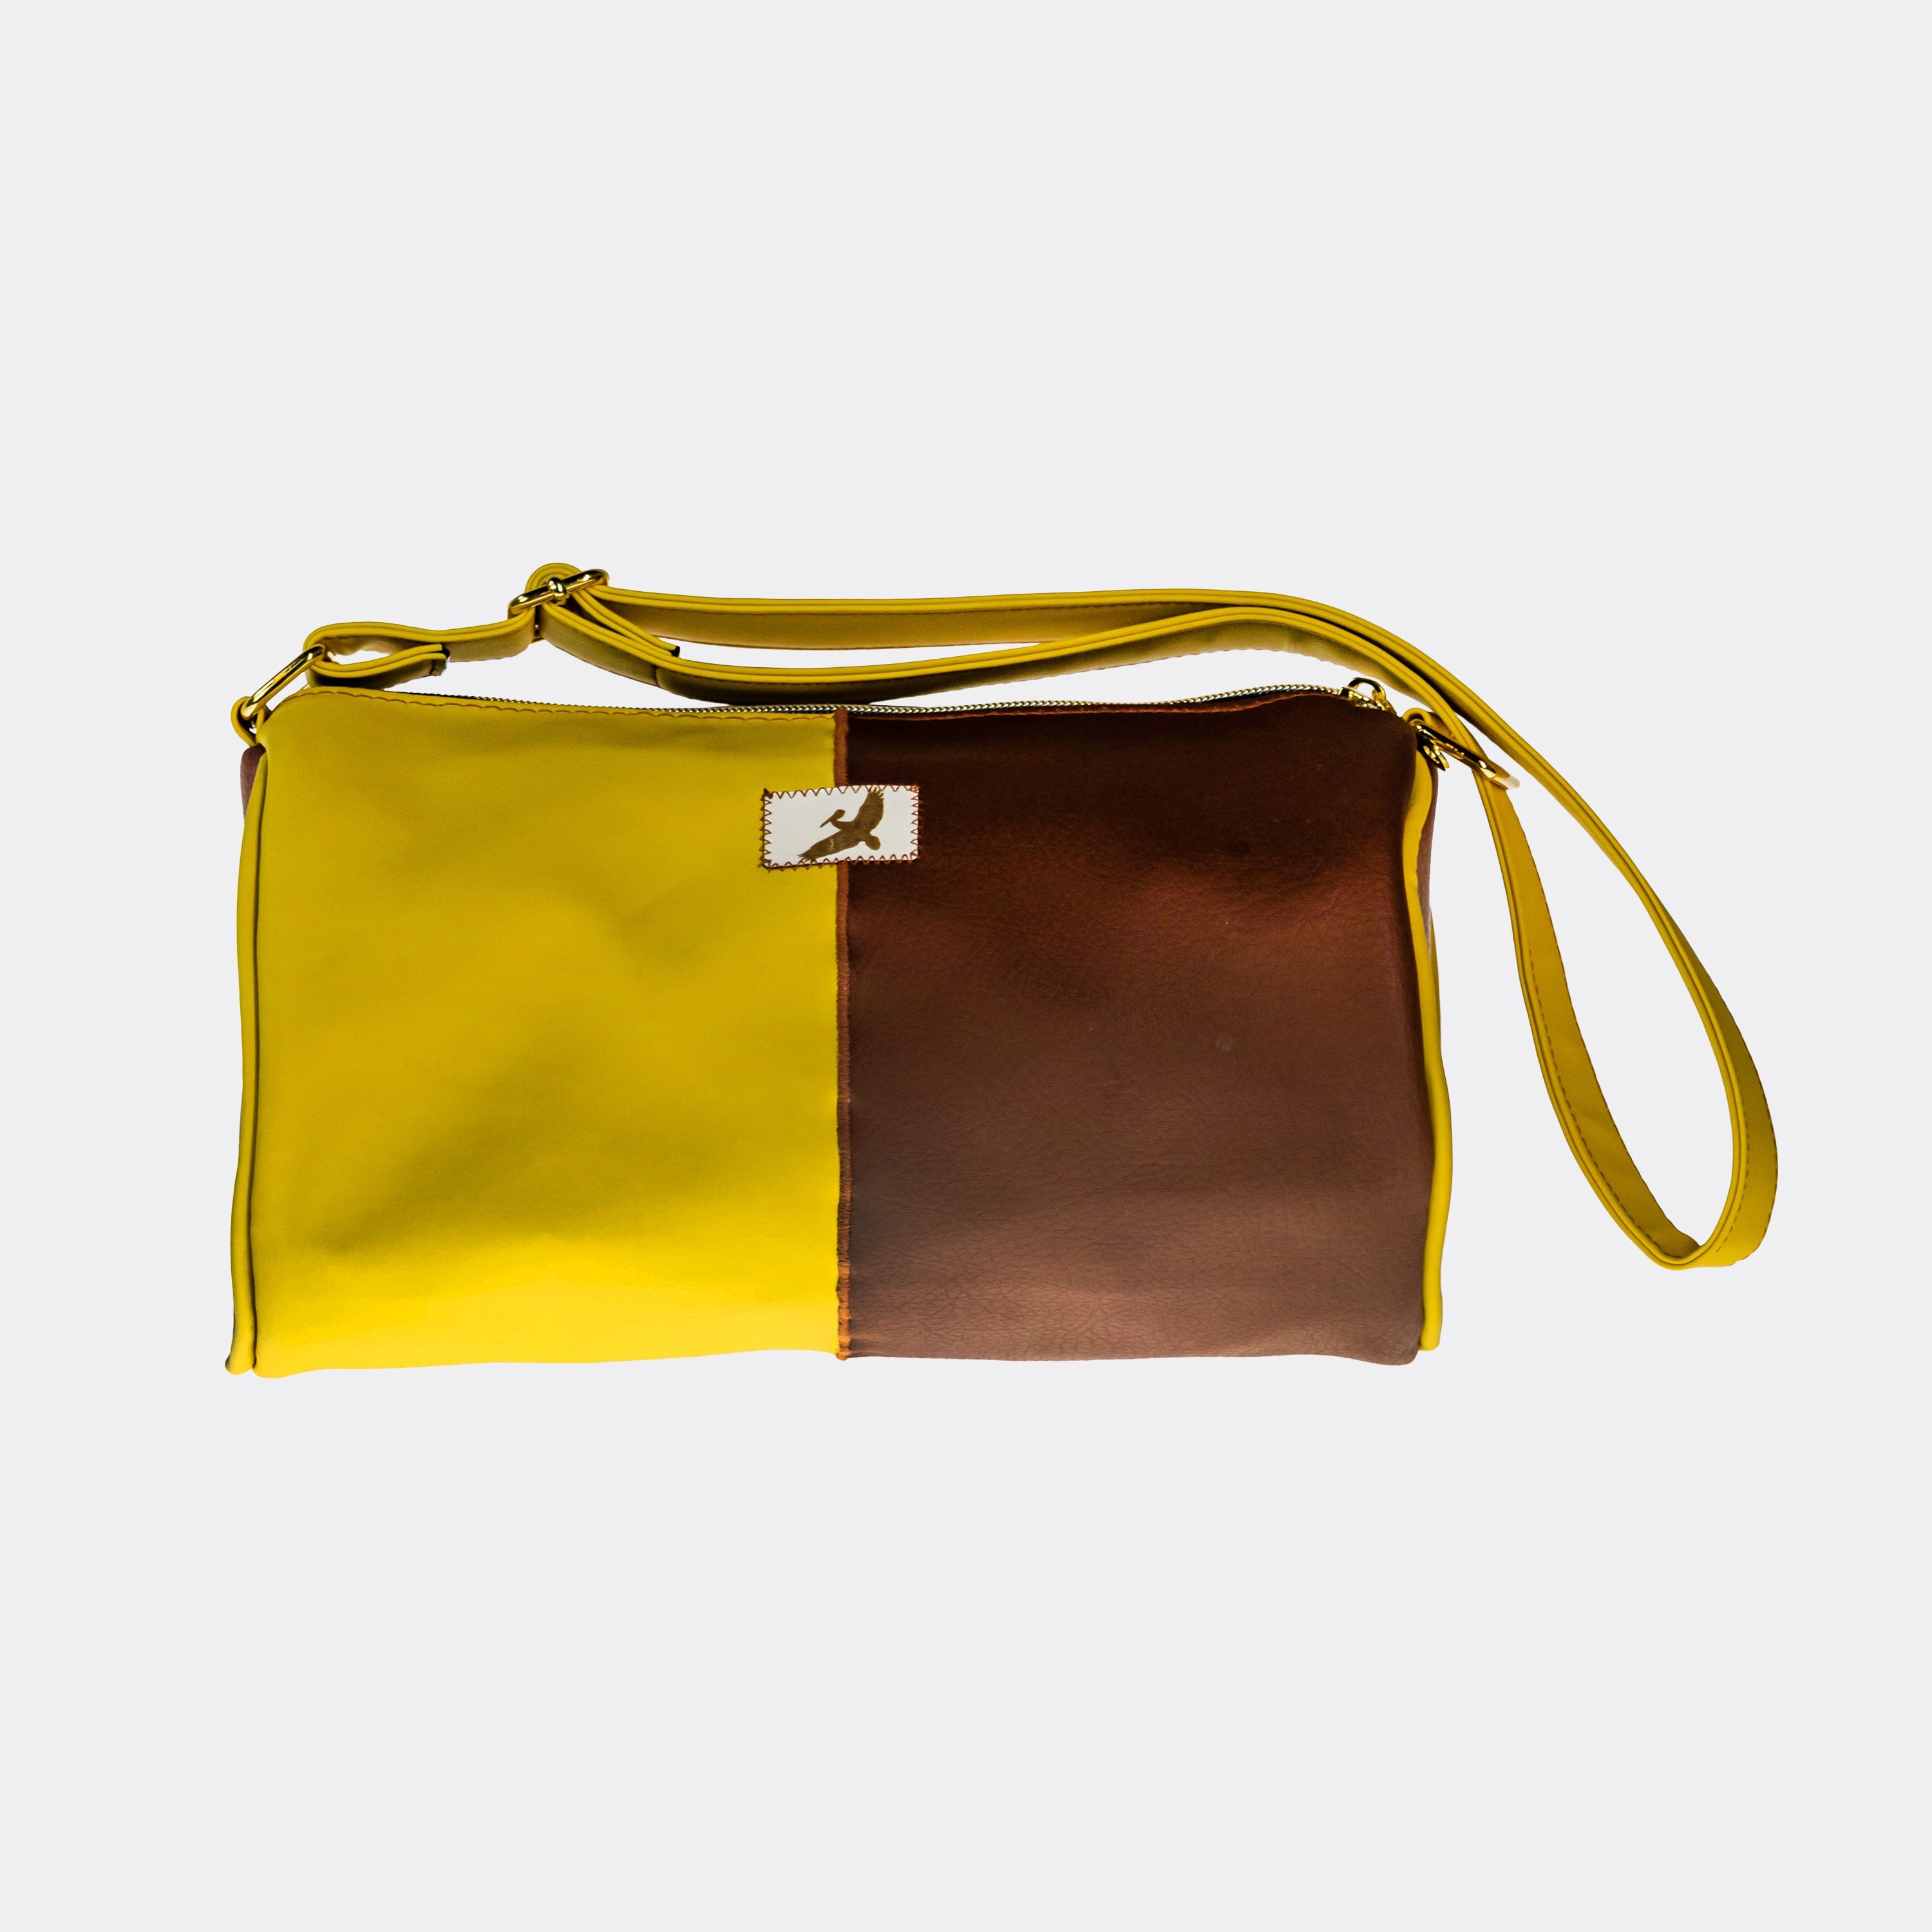 MINI Genuine Duffle Bag Gradient Island Yellow 80225A21195